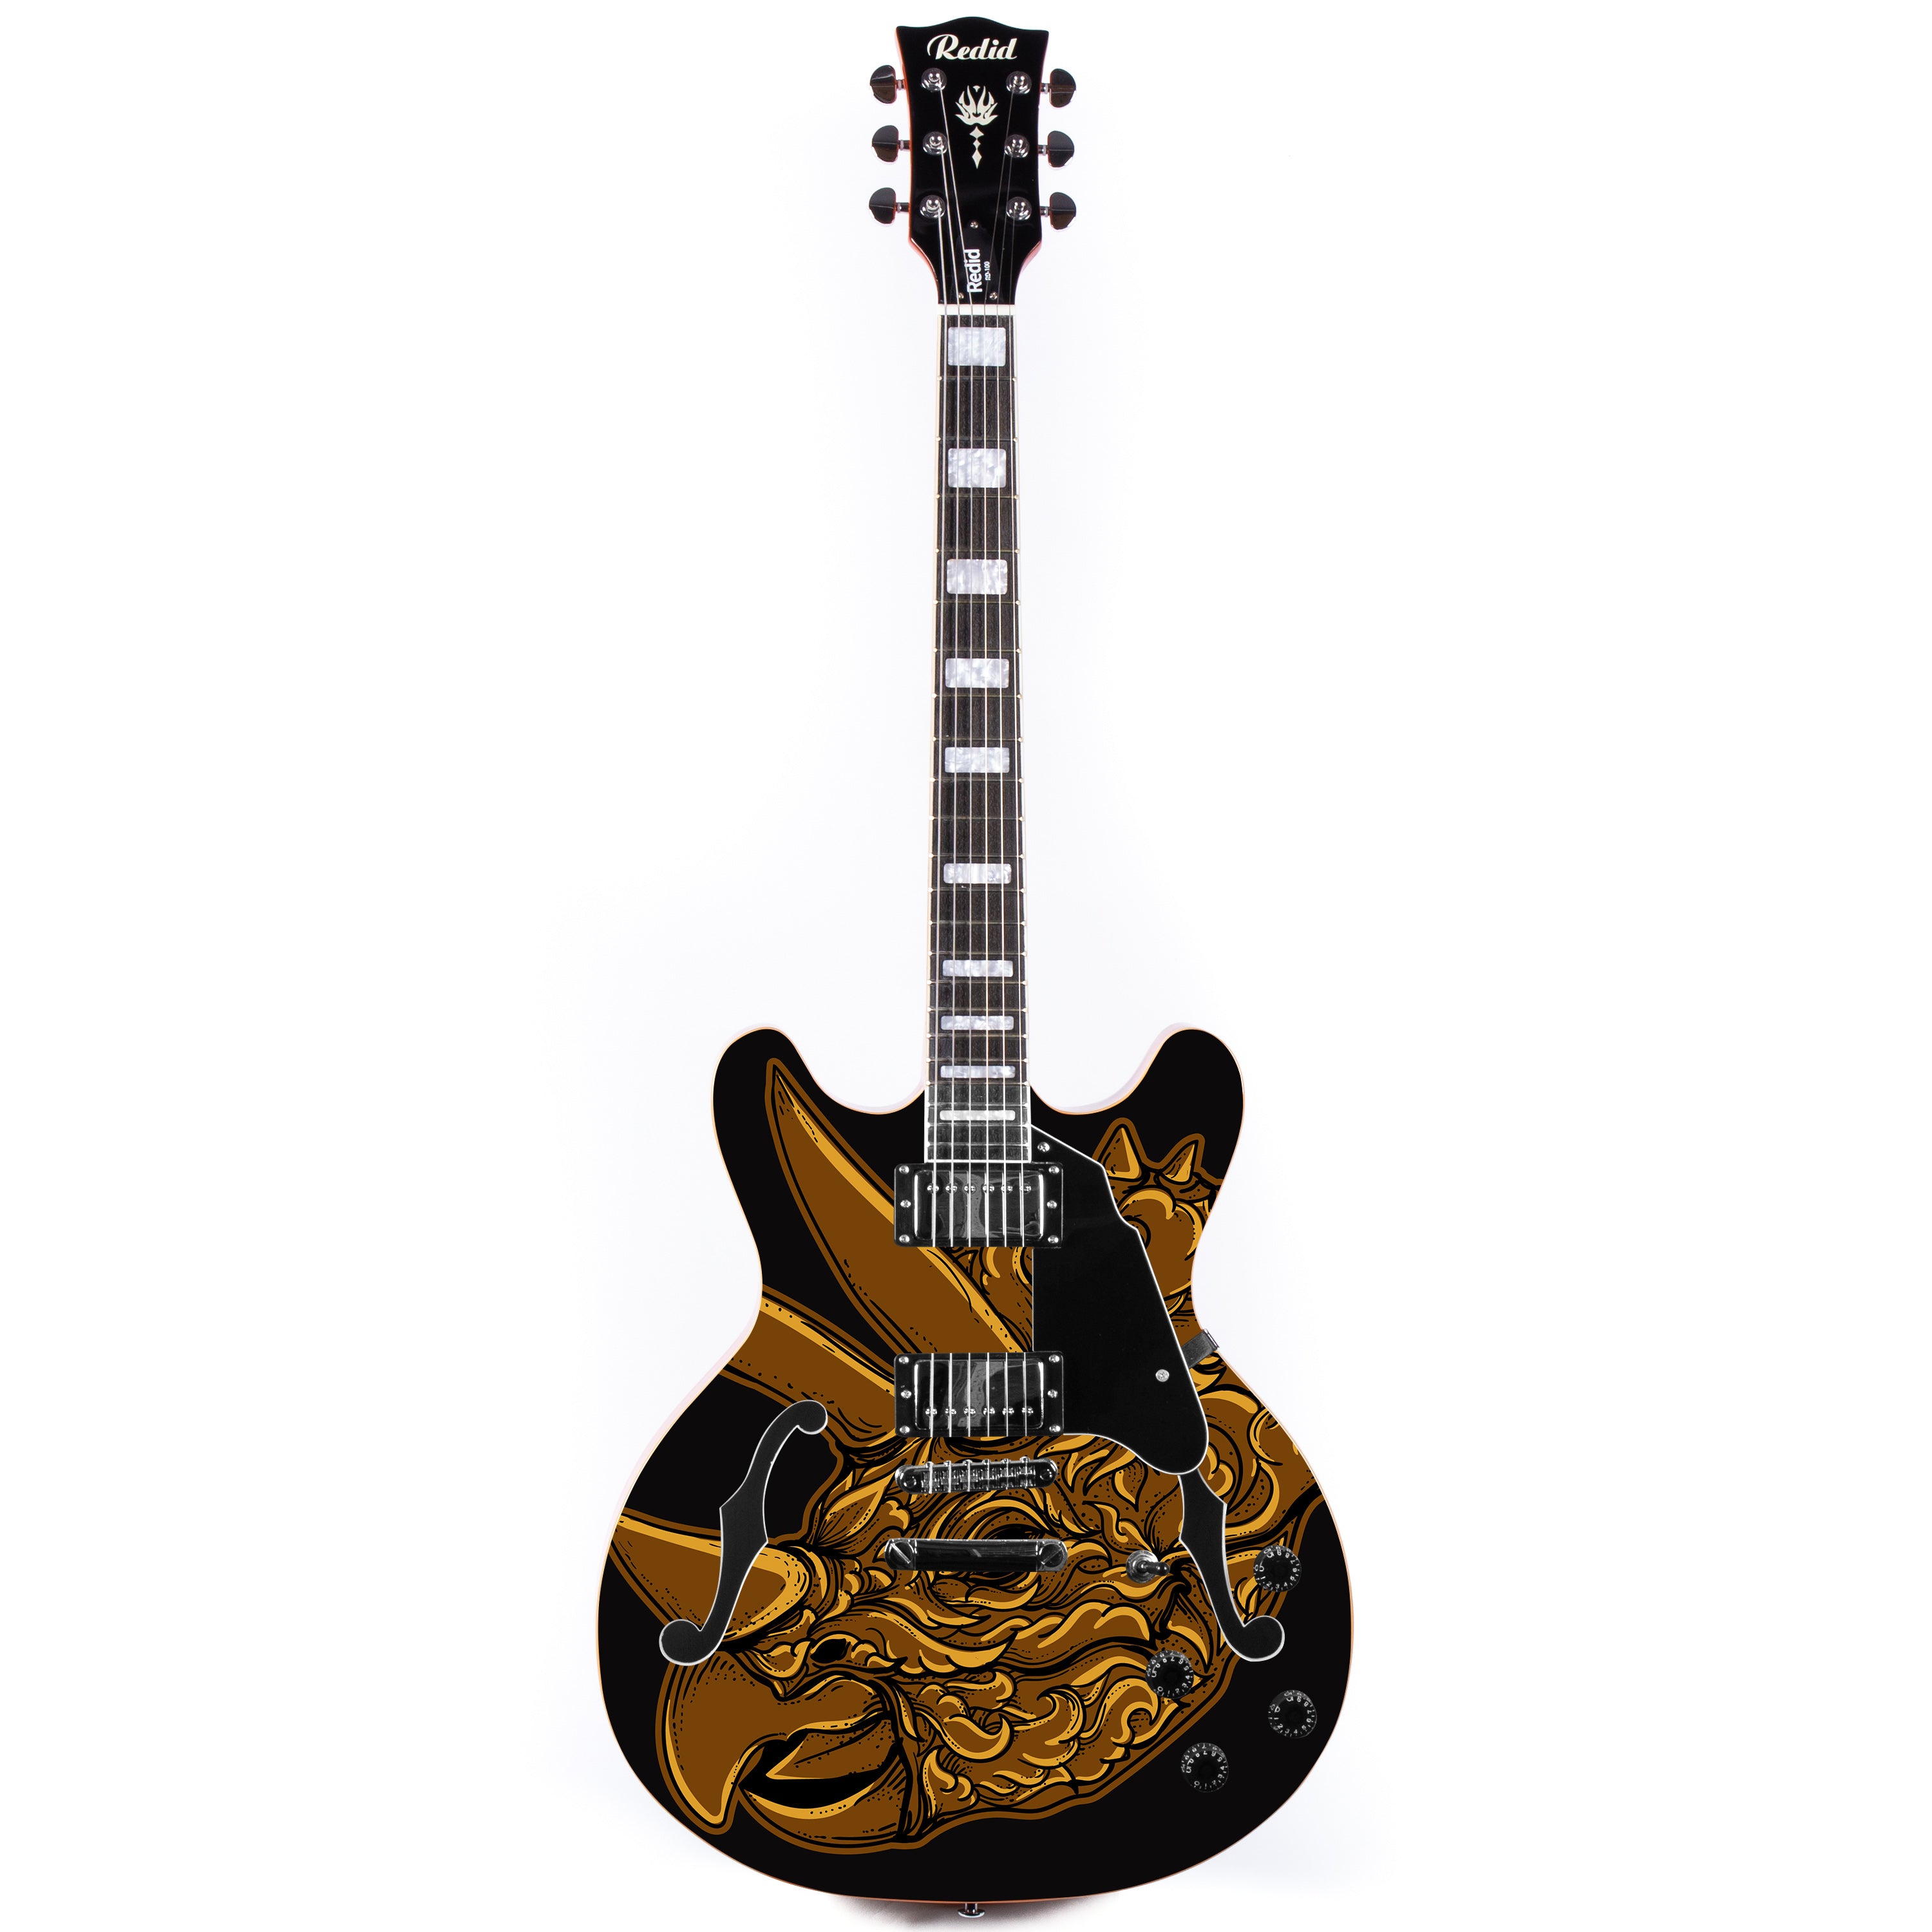 Redid Full Scale Private Custom Printed Electric Guitar Semi-Hollow Body